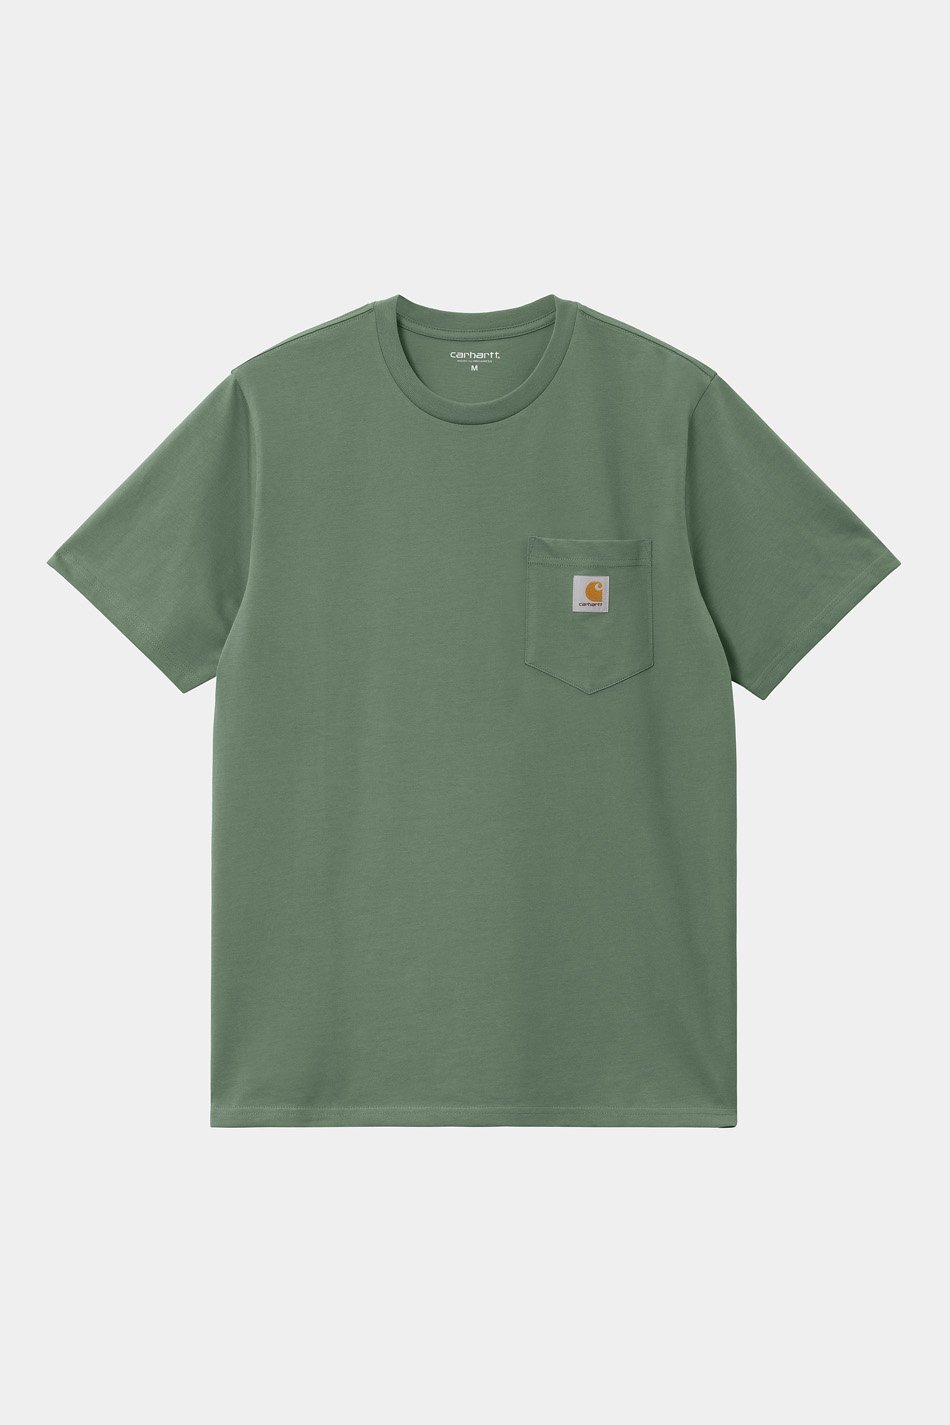 Camiseta Carhartt WIP Pocket Glassy Tea